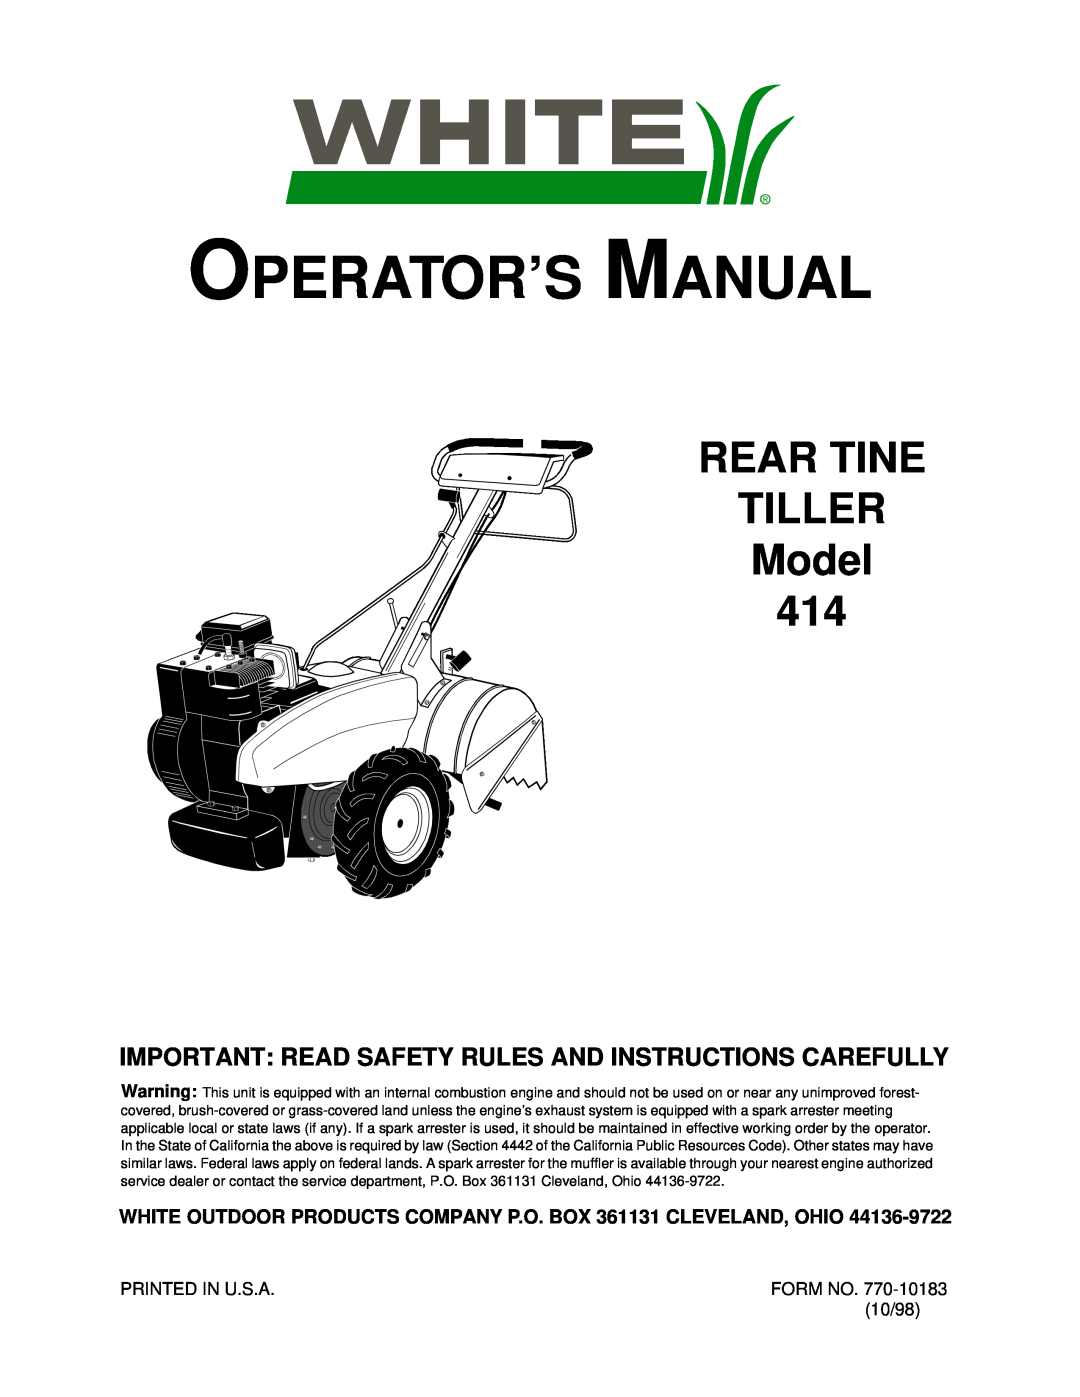 White manual REAR TINE TILLER Model 414, Operator’S Manual 